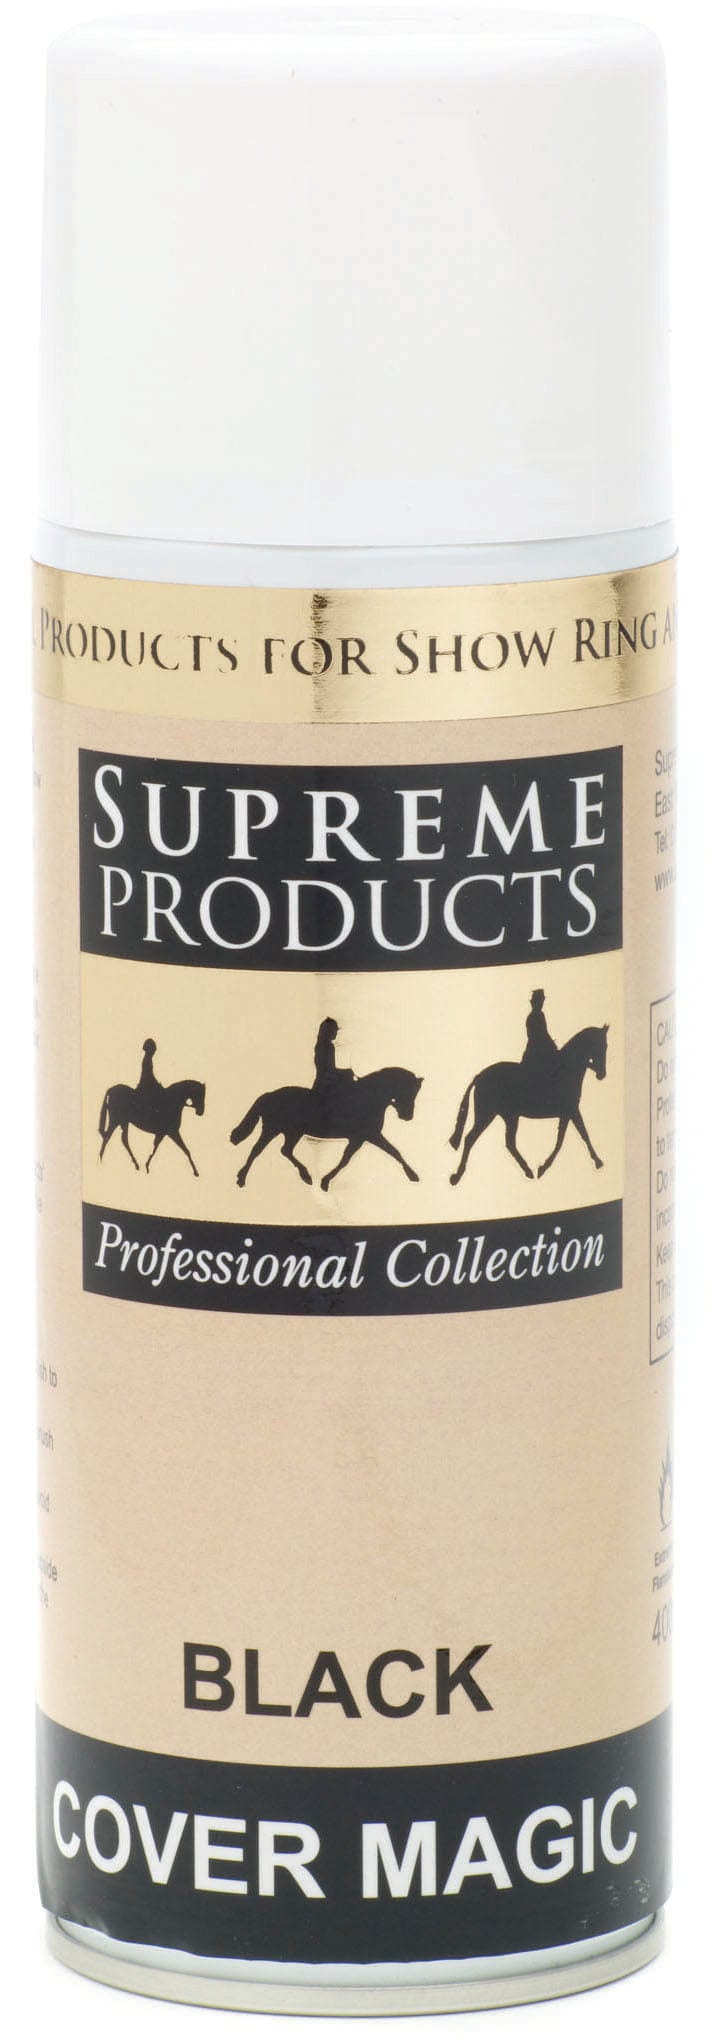 Supreme products cover magic black